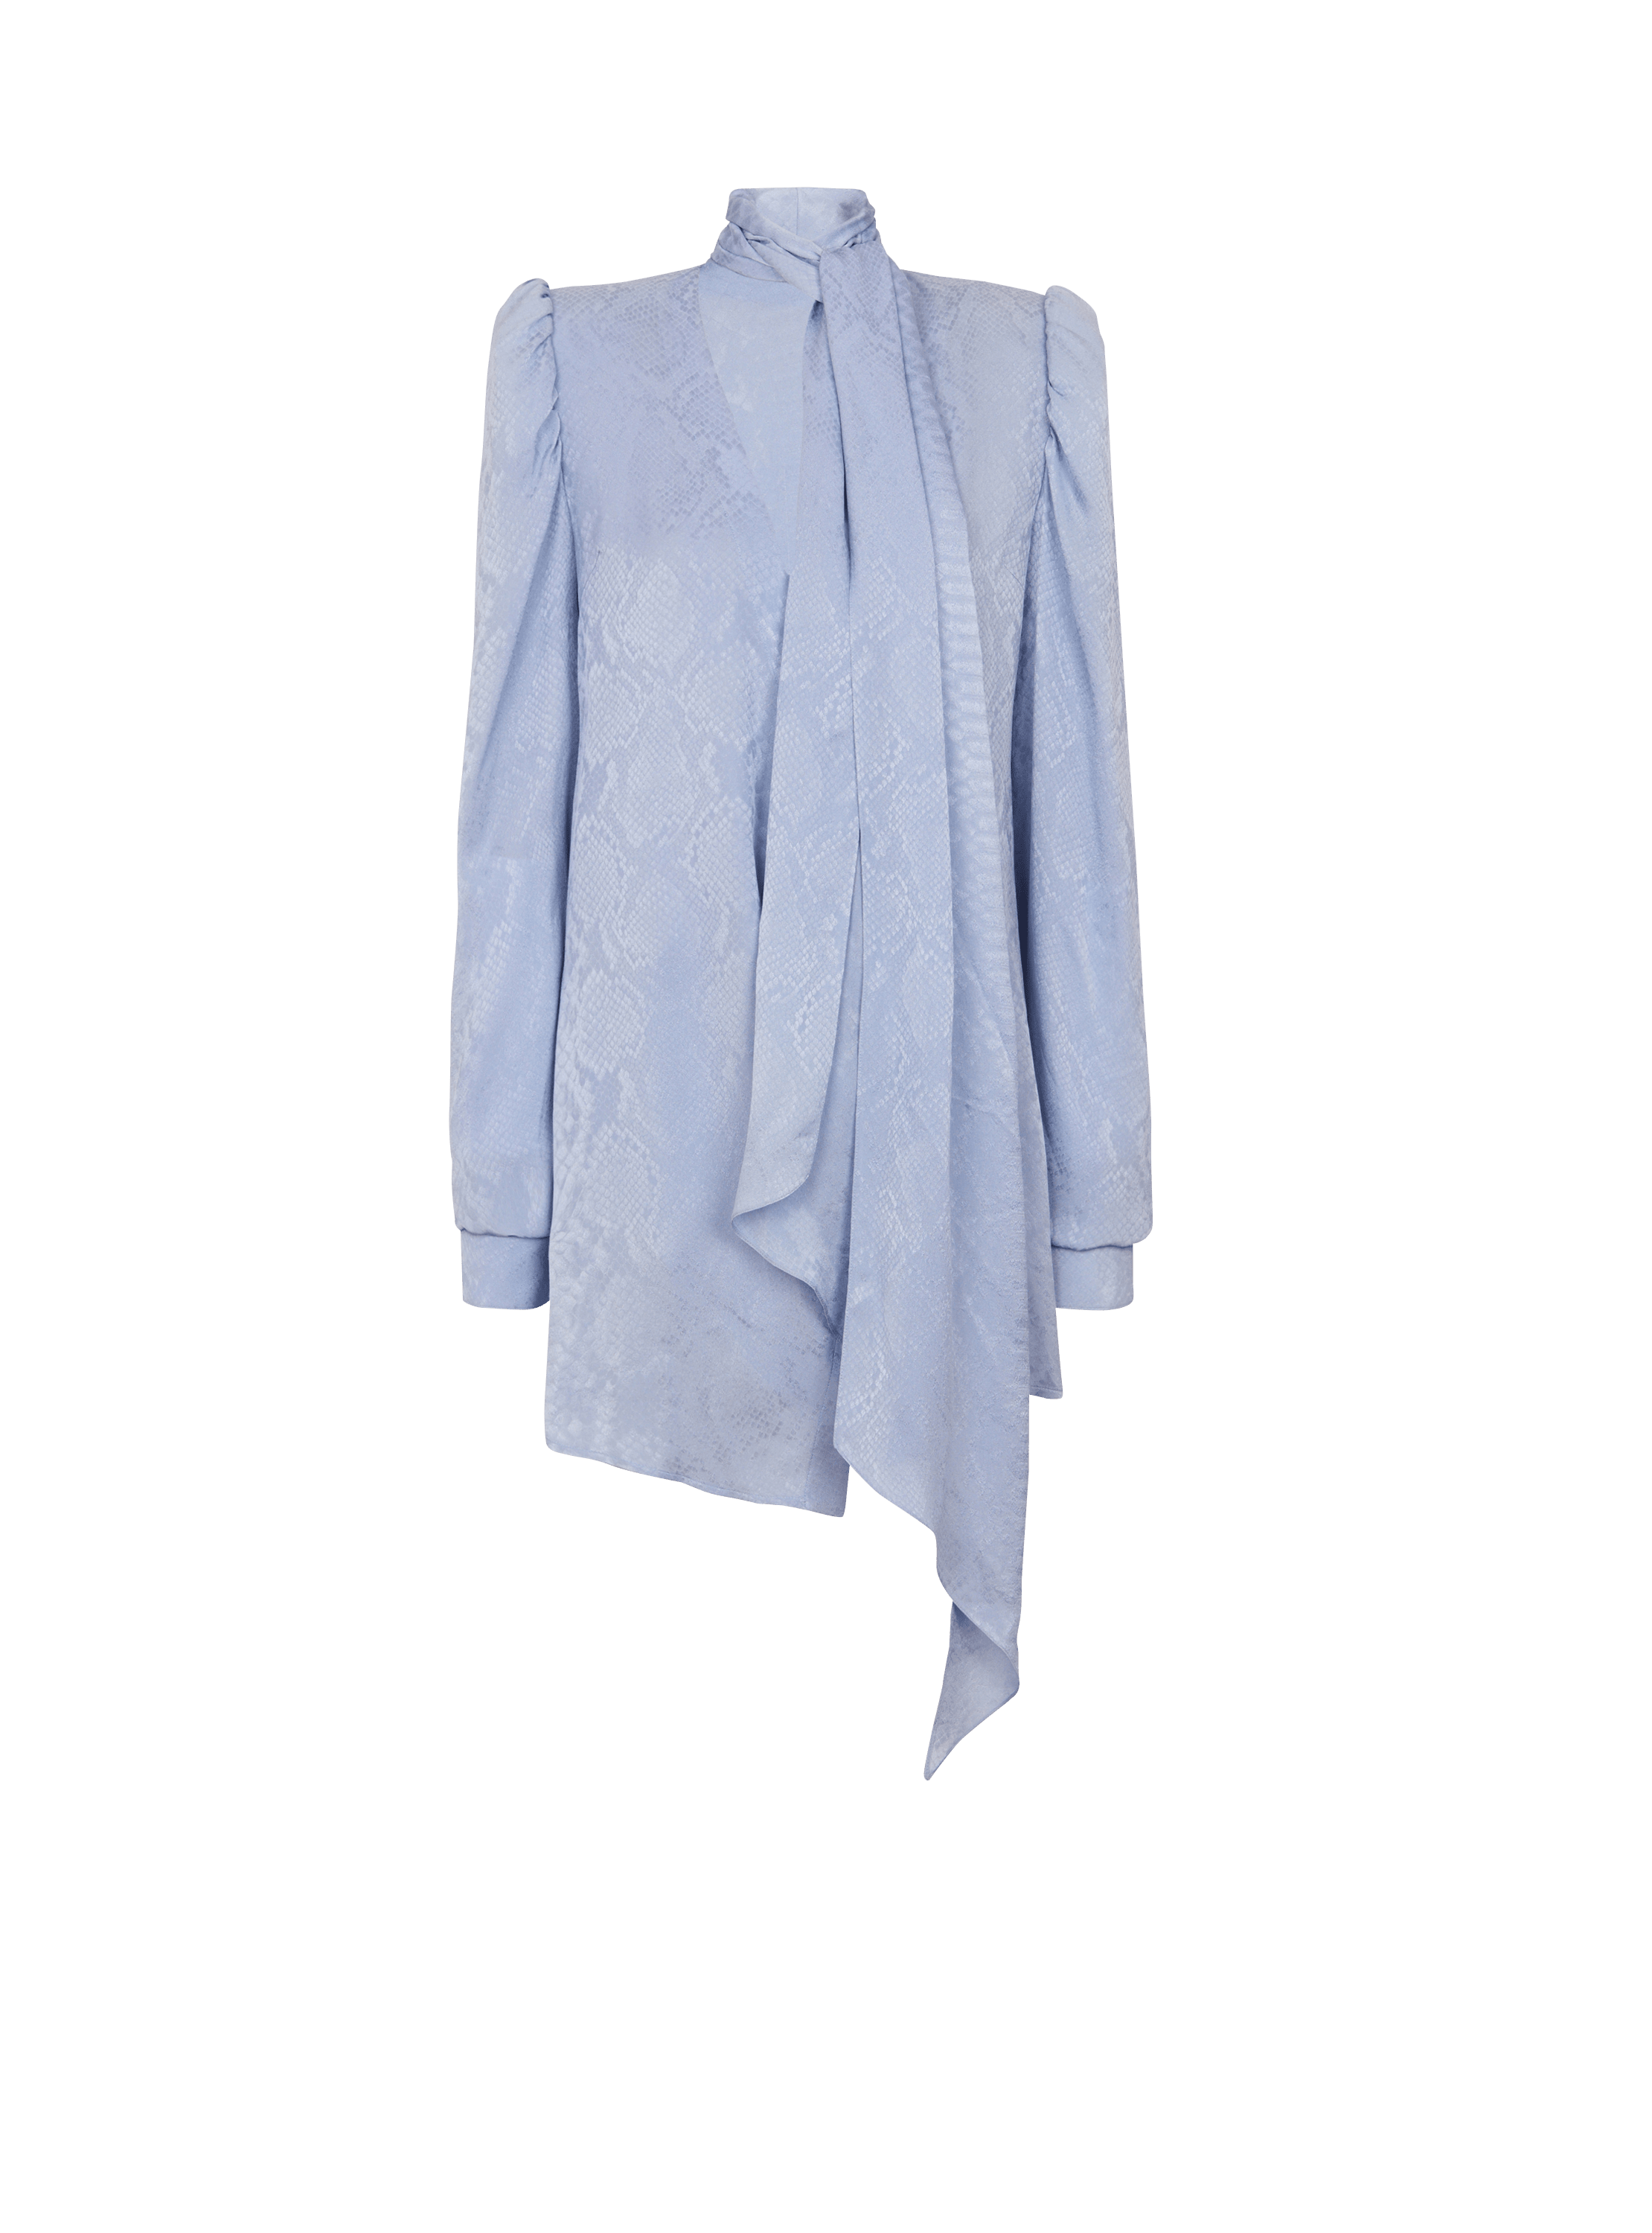 Geknotetes Kleid aus Python-Seide, blau, hi-res